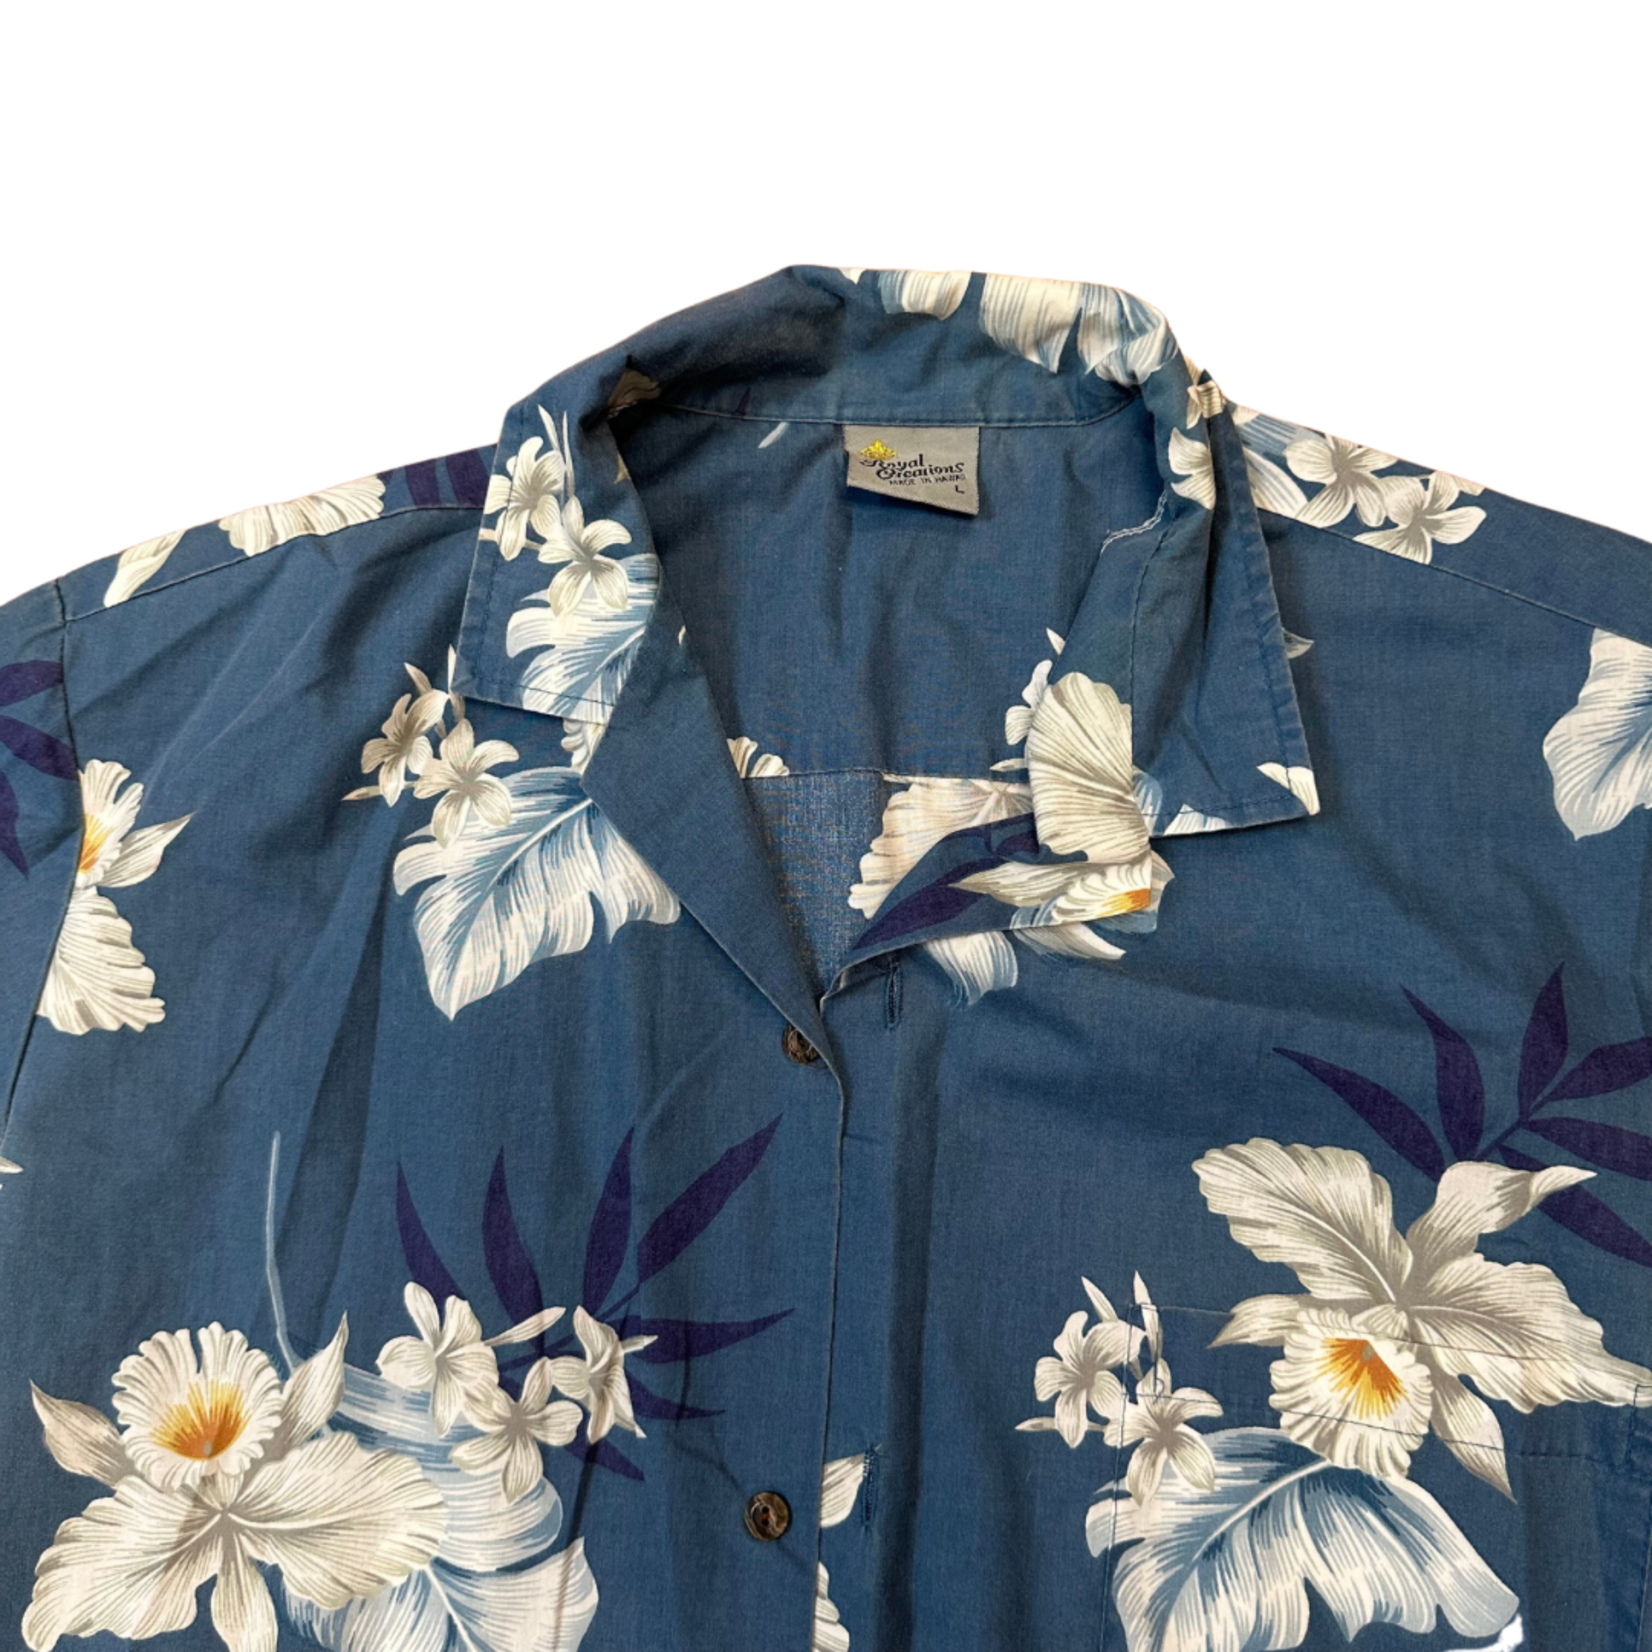 Mission Zero Men’s Vintage Aloha Shirt - Royal Creations - Large